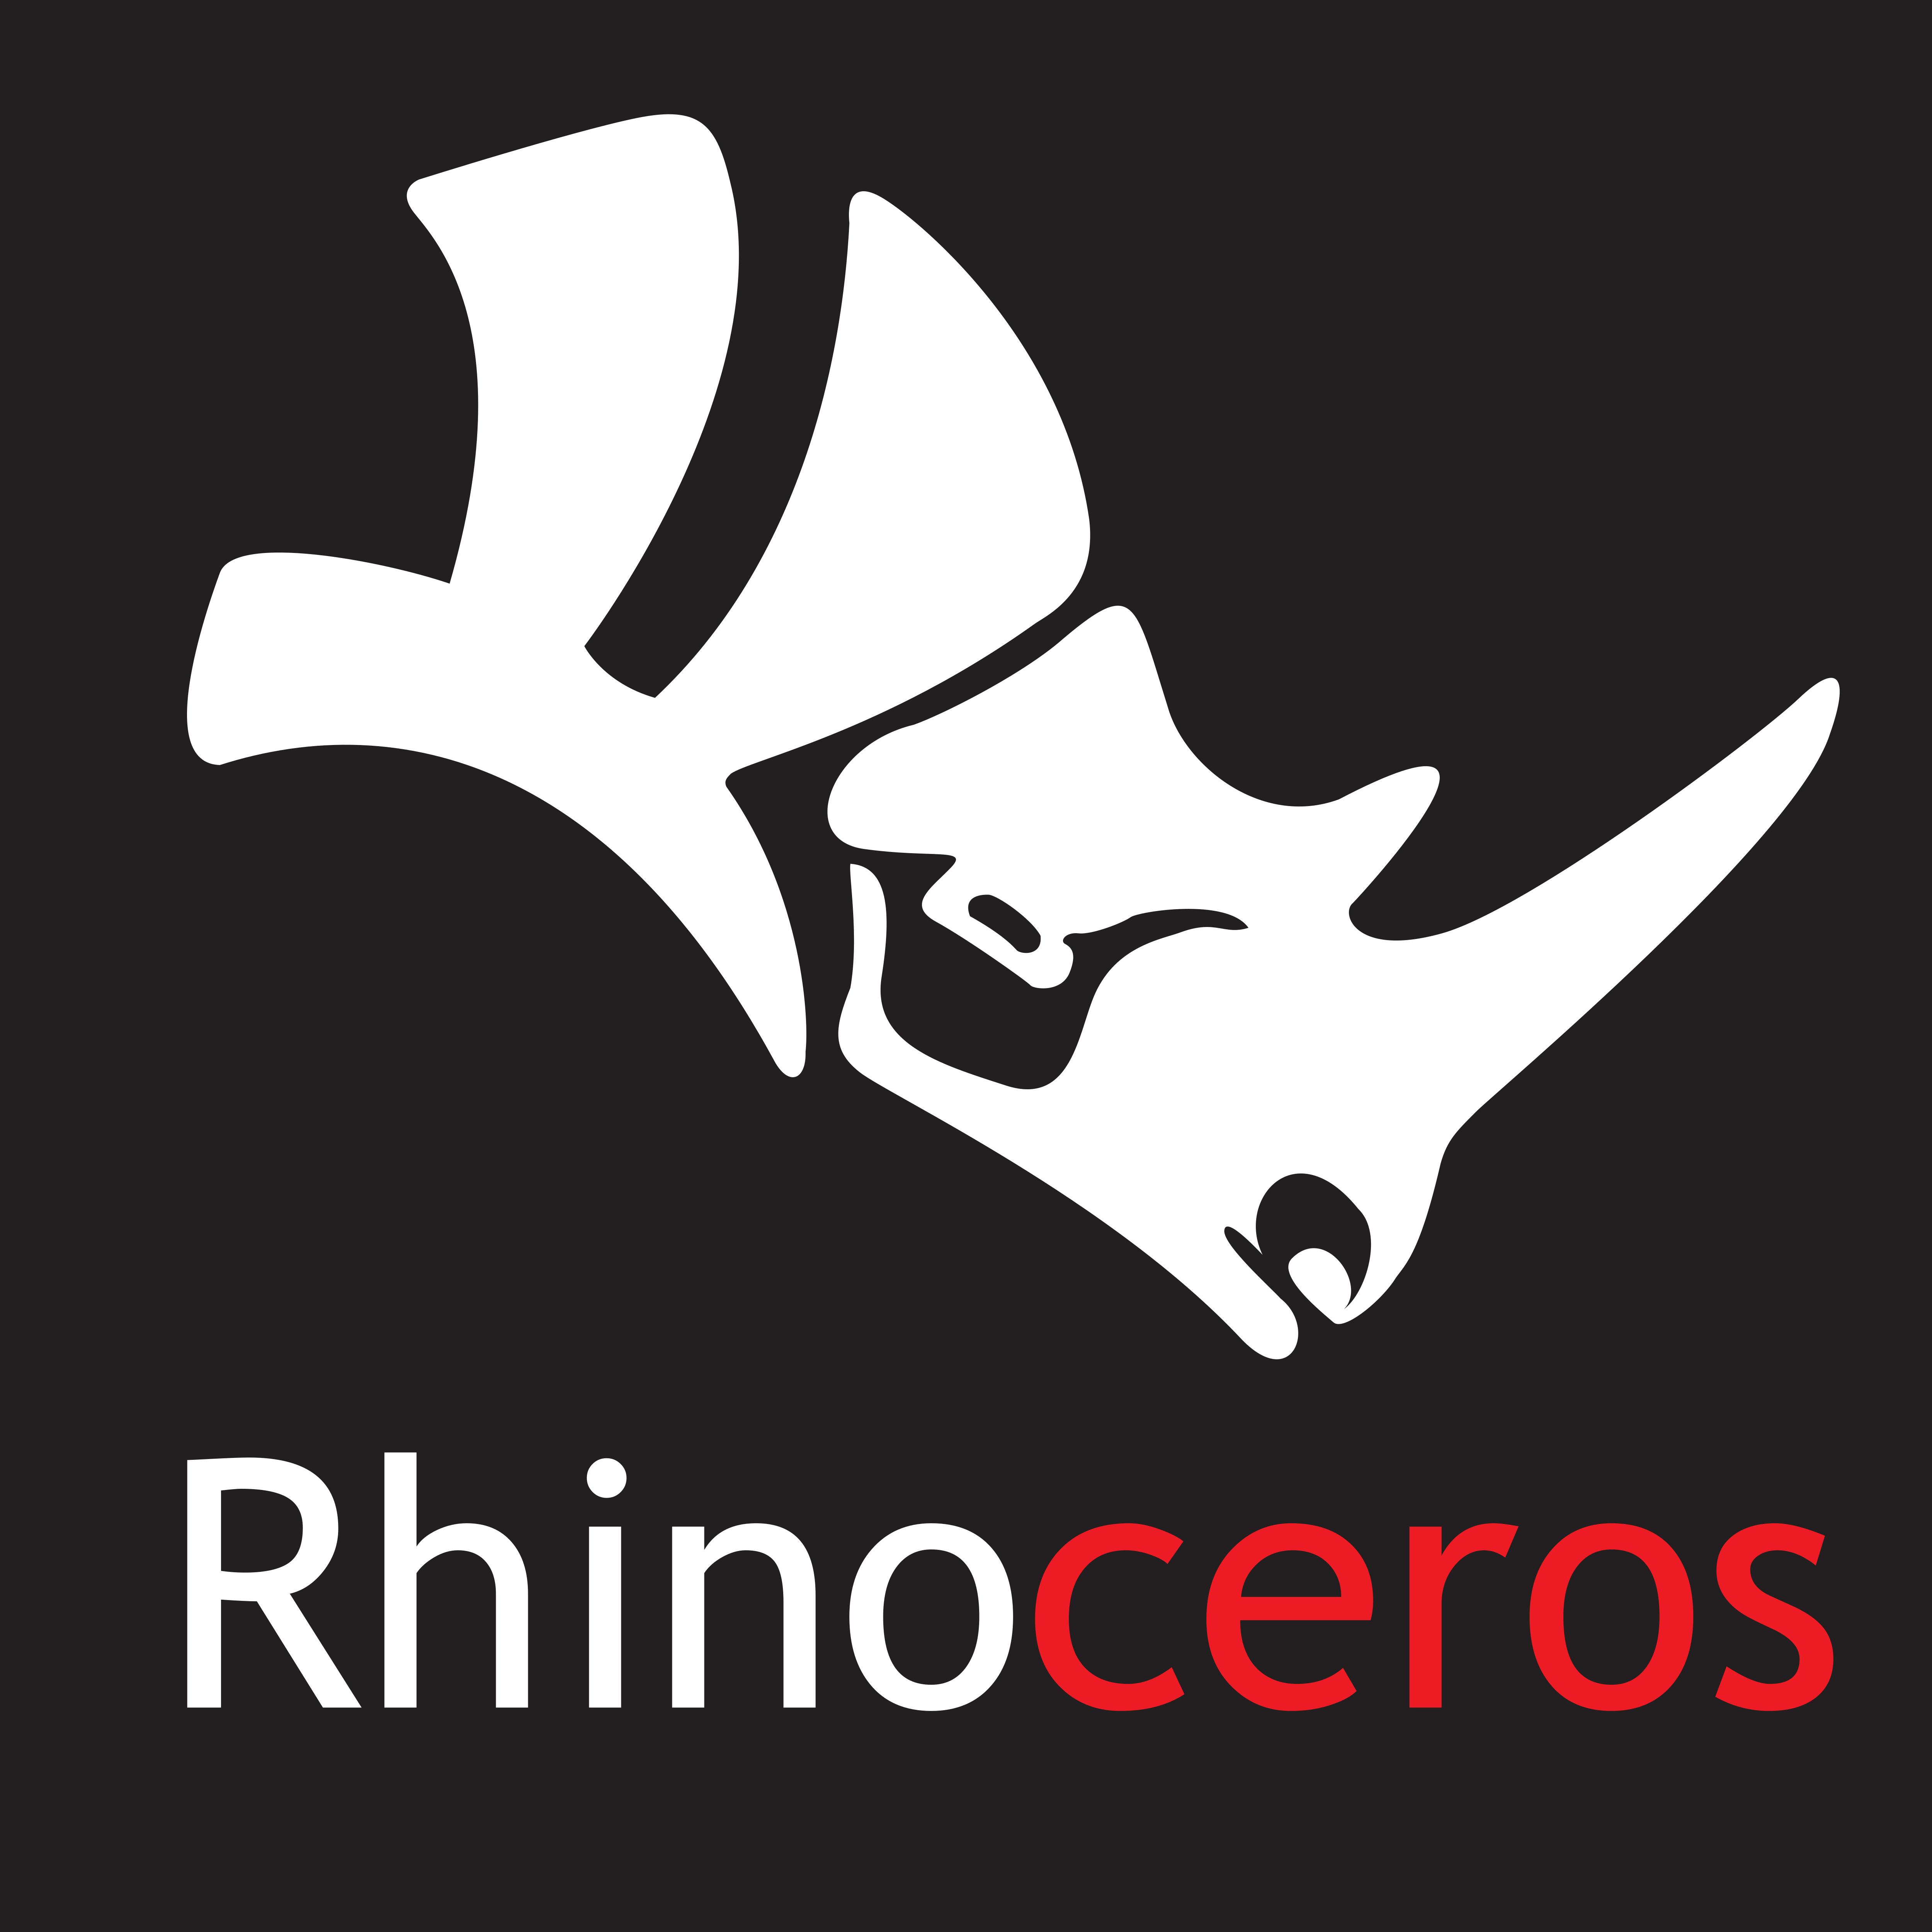 rhino 6 logo